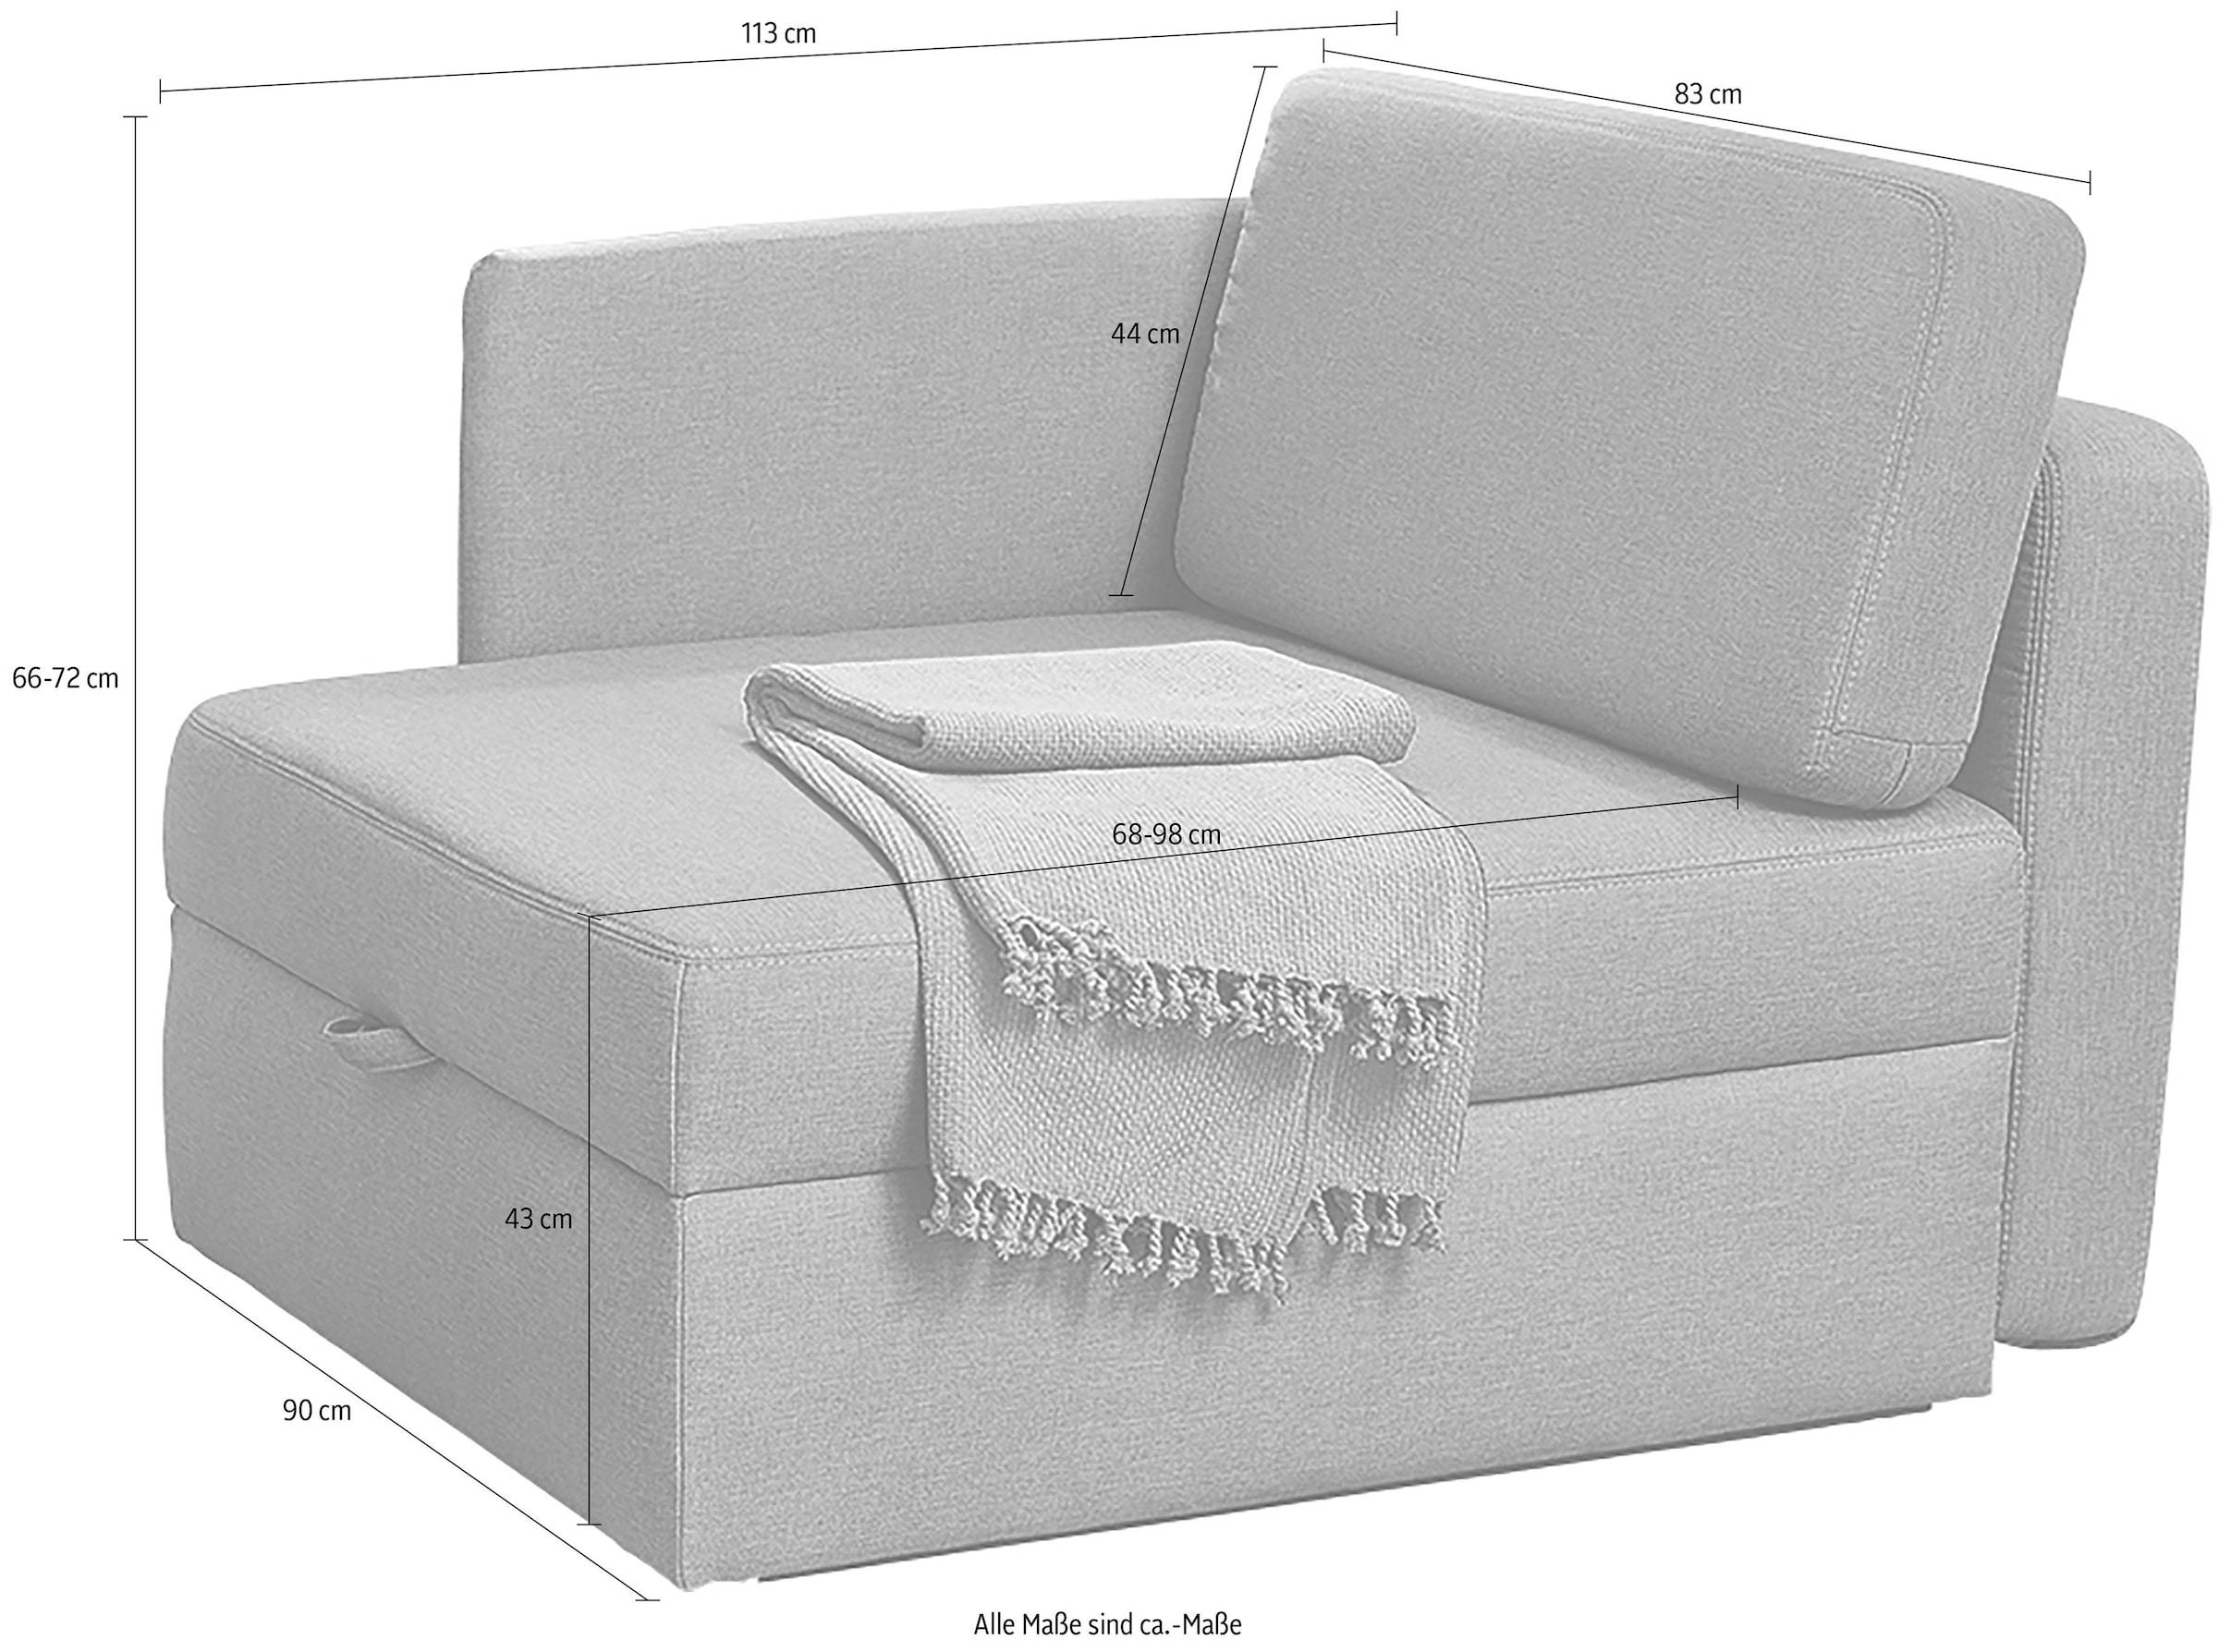 Jockenhöfer Gruppe Sessel »Youngster«, platzsparend, verwandelbar in ein Gästebett, Liegefläche 84x201 cm